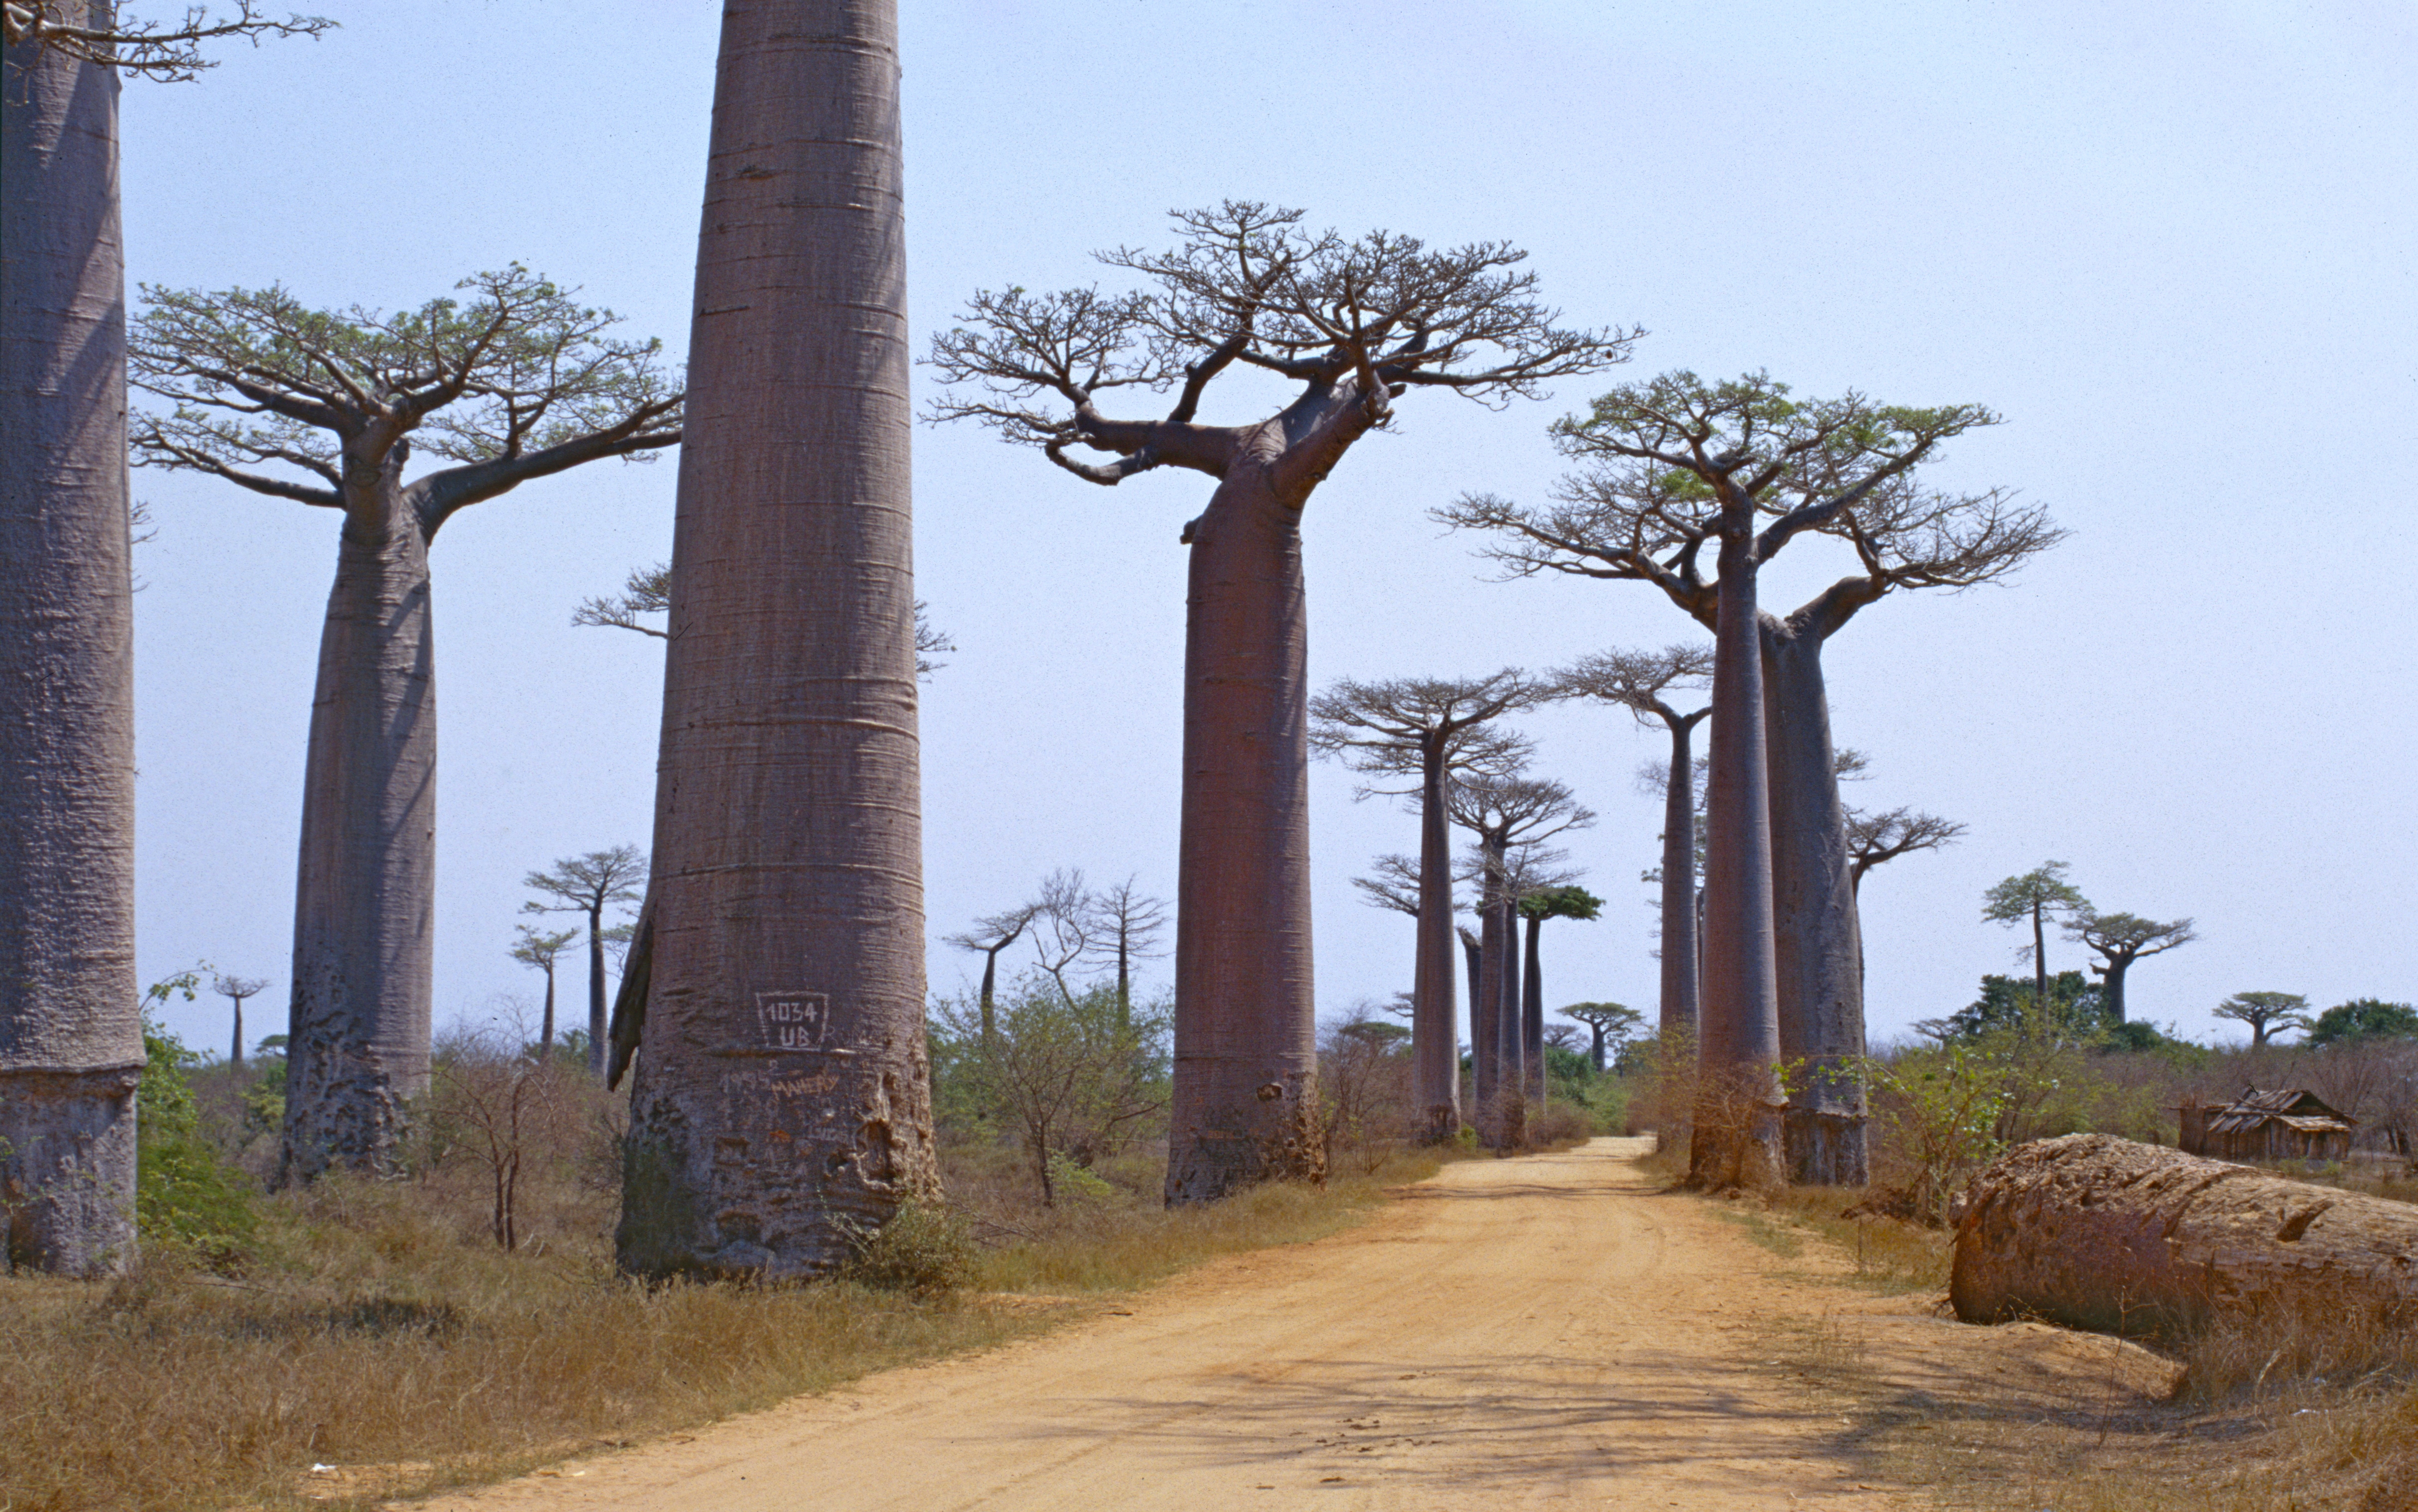 Grandidier S Baobab Encyclopedia Of Life